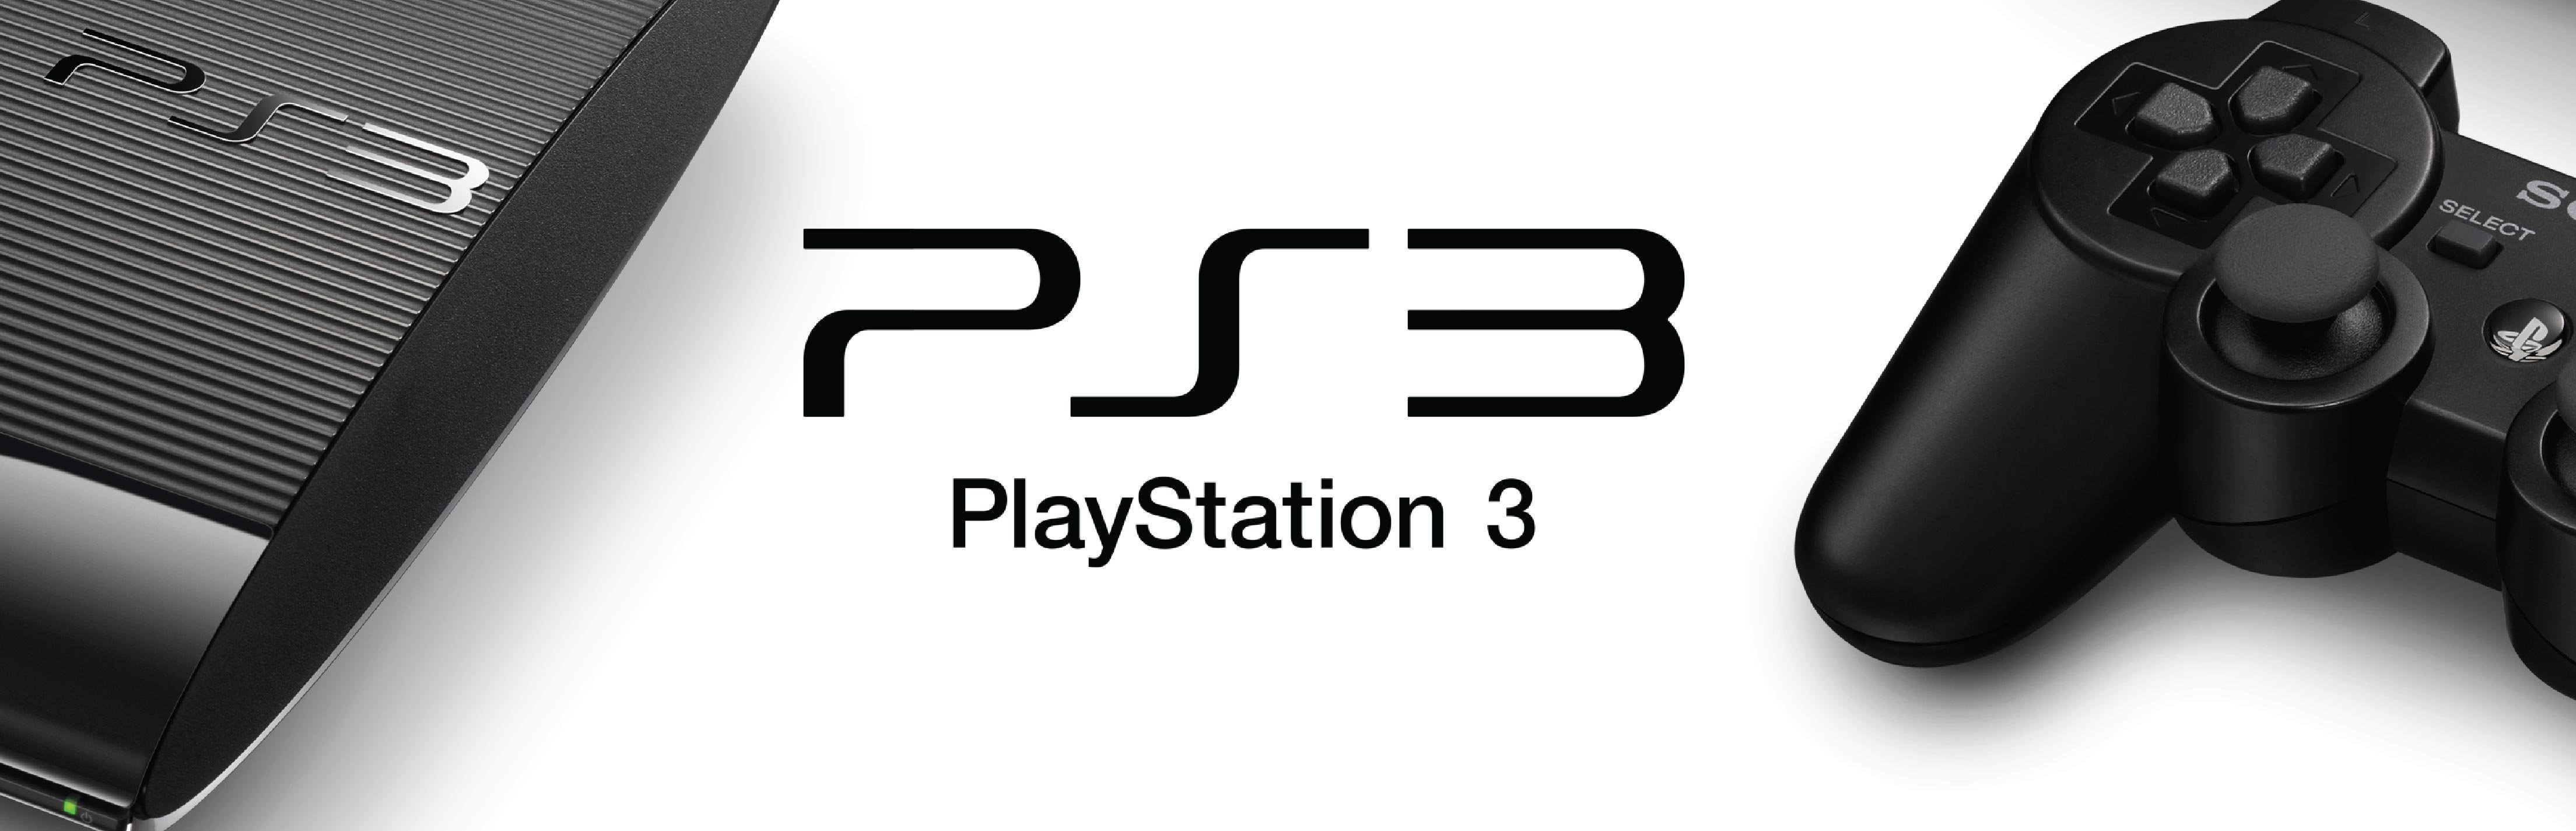 Play ps3. PLAYSTATION 5. Плейстейшен 3 ps3 logo. Консоль Sony PLAYSTATION лого. PLAYSTATION 3 e3 2005.